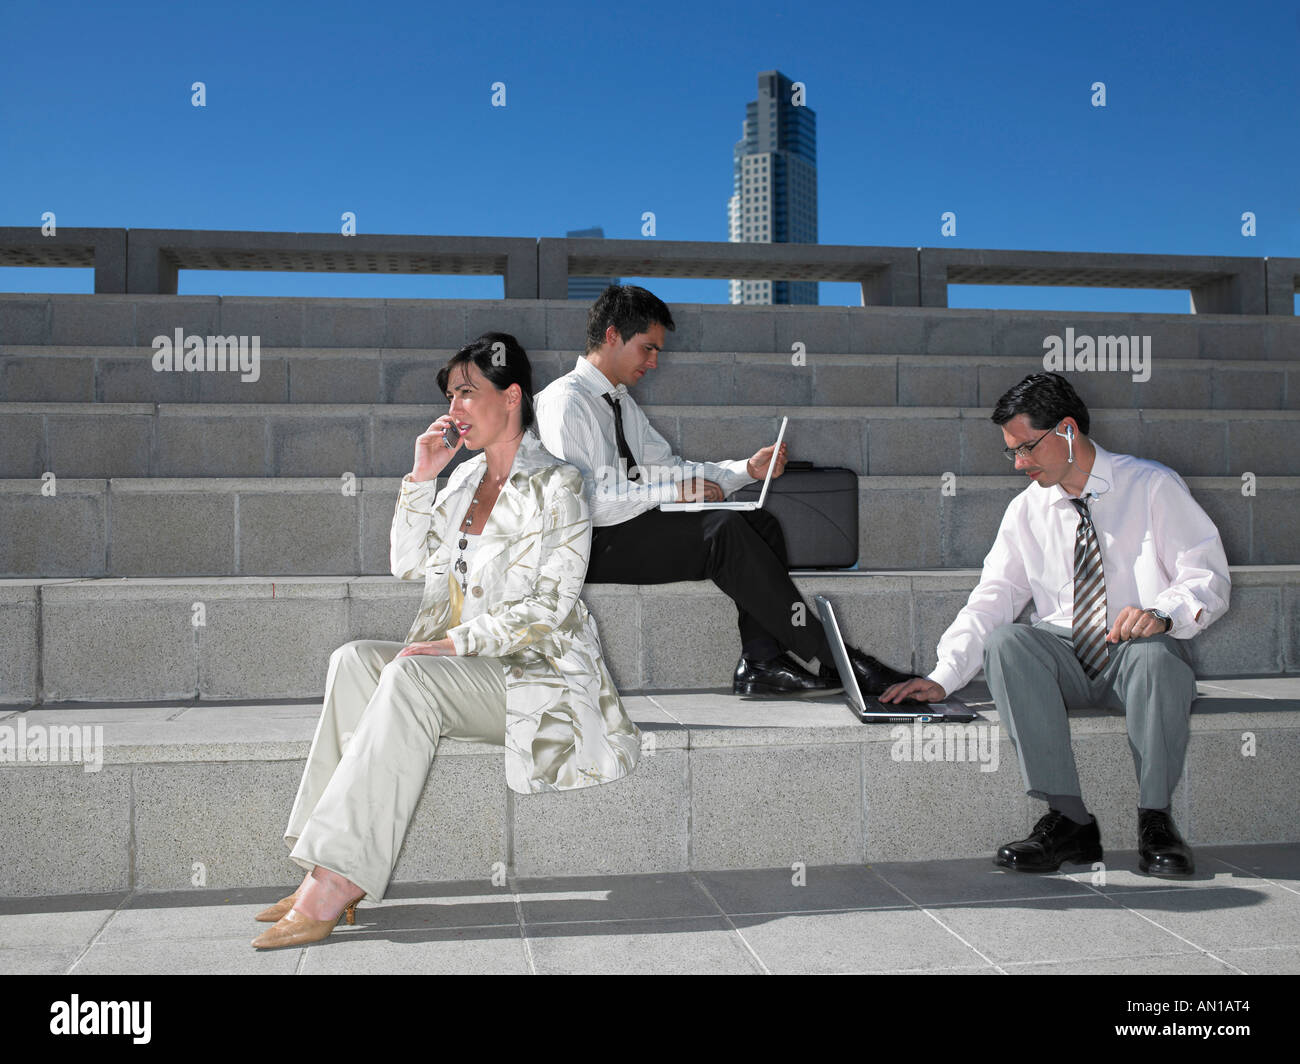 Three people sitting on steps Stock Photo